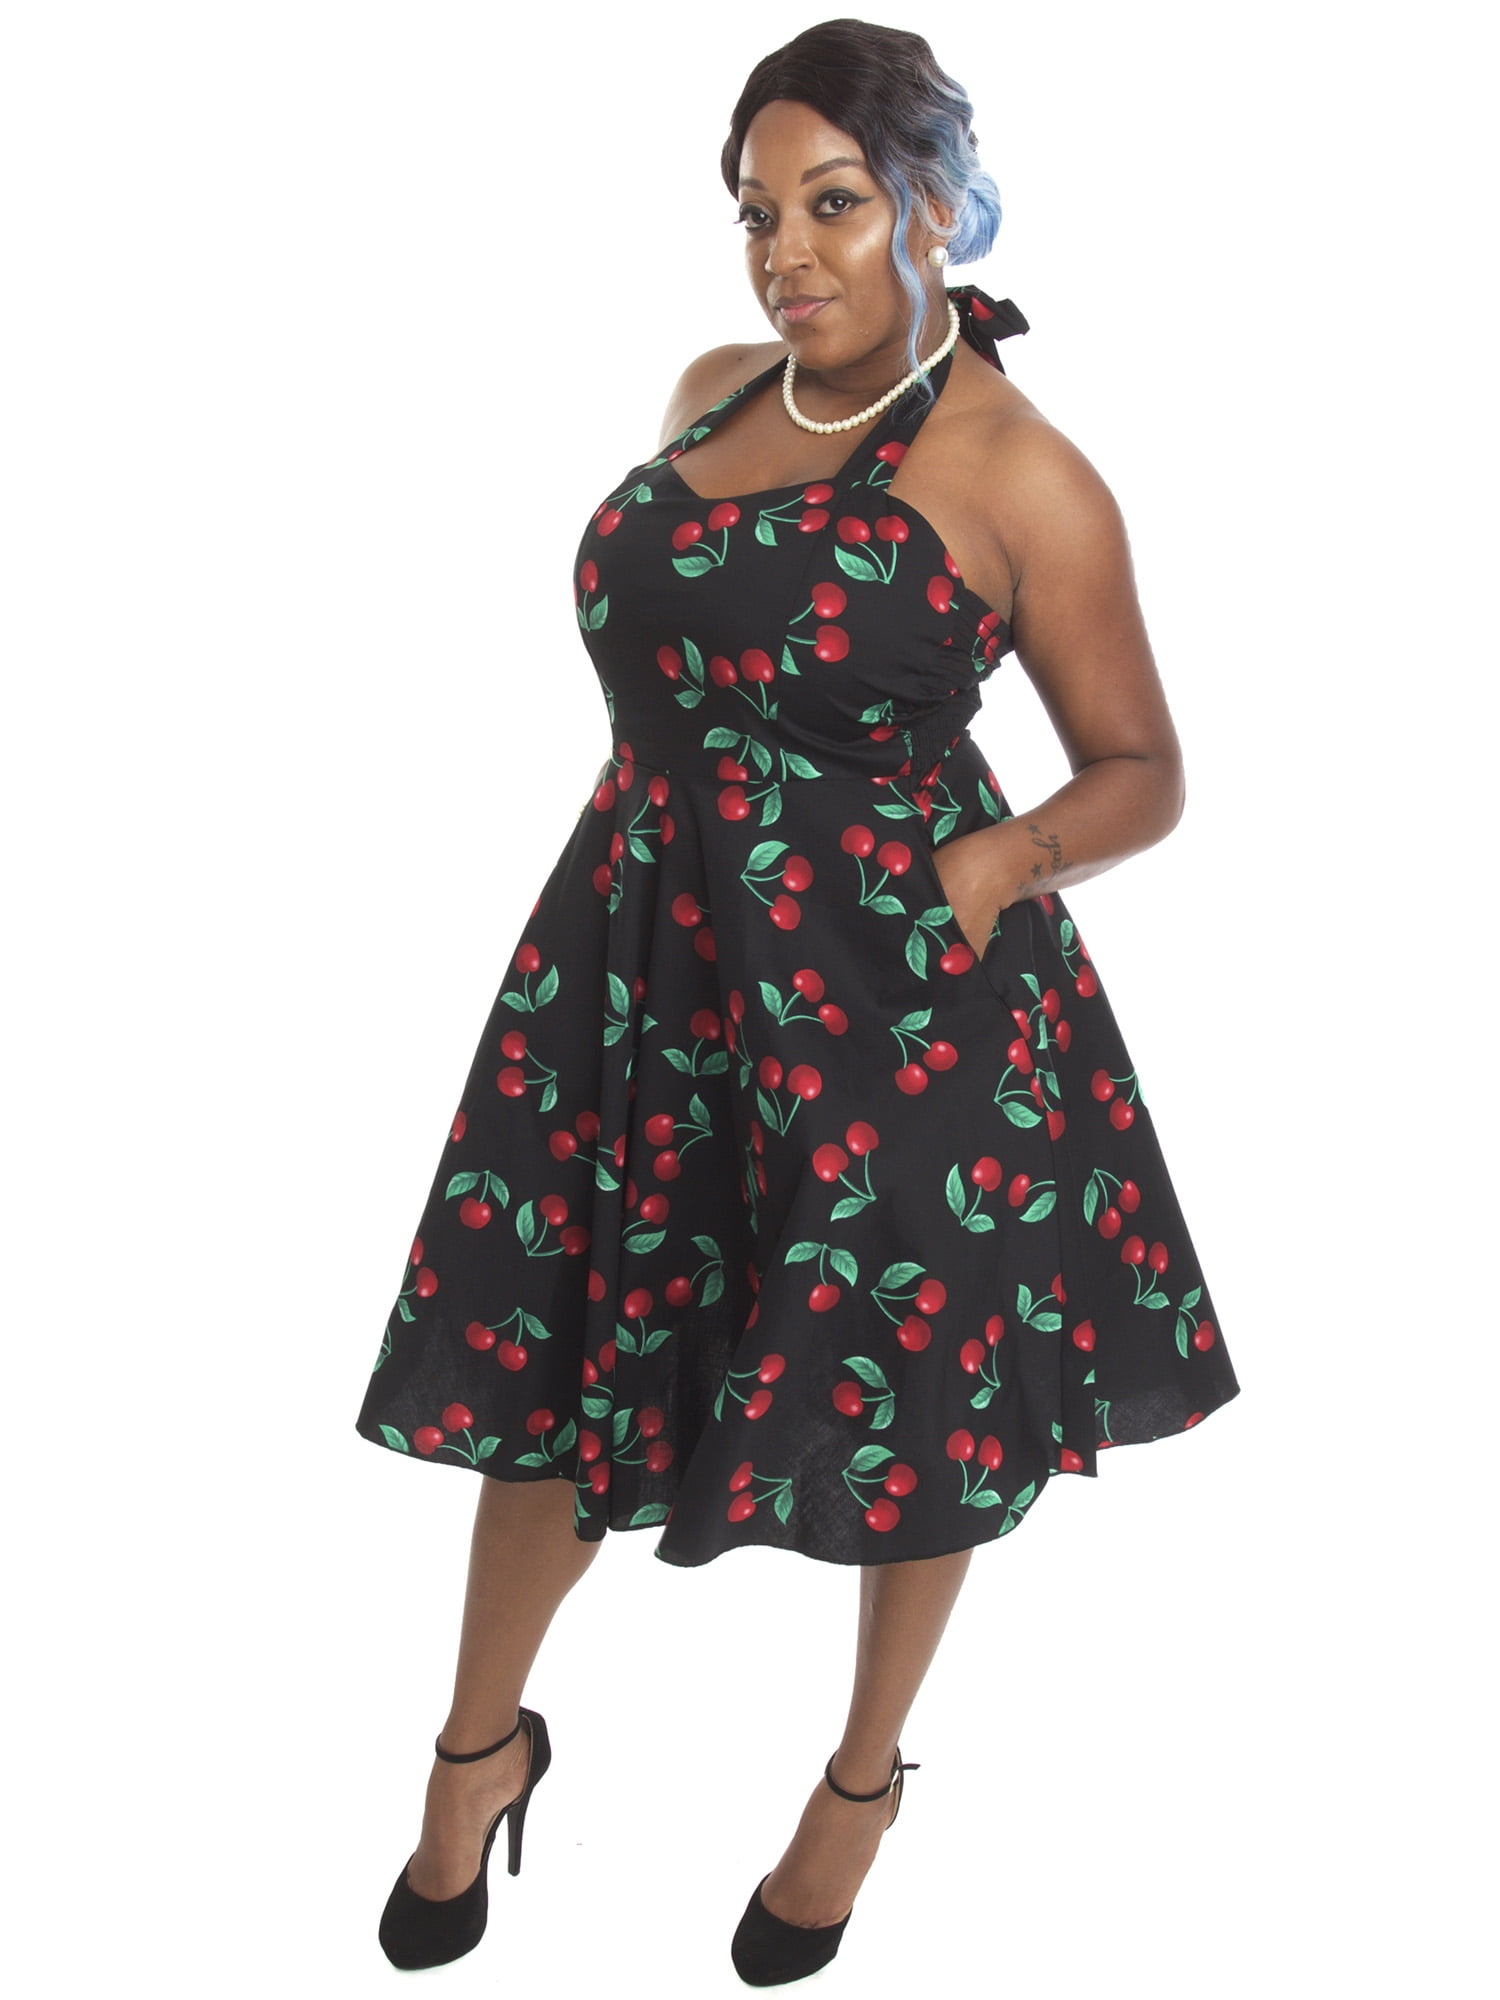 Cherry Print Black Cotton Halter Dress Pin Up Rockabilly 50s - S M L - Walmart.com